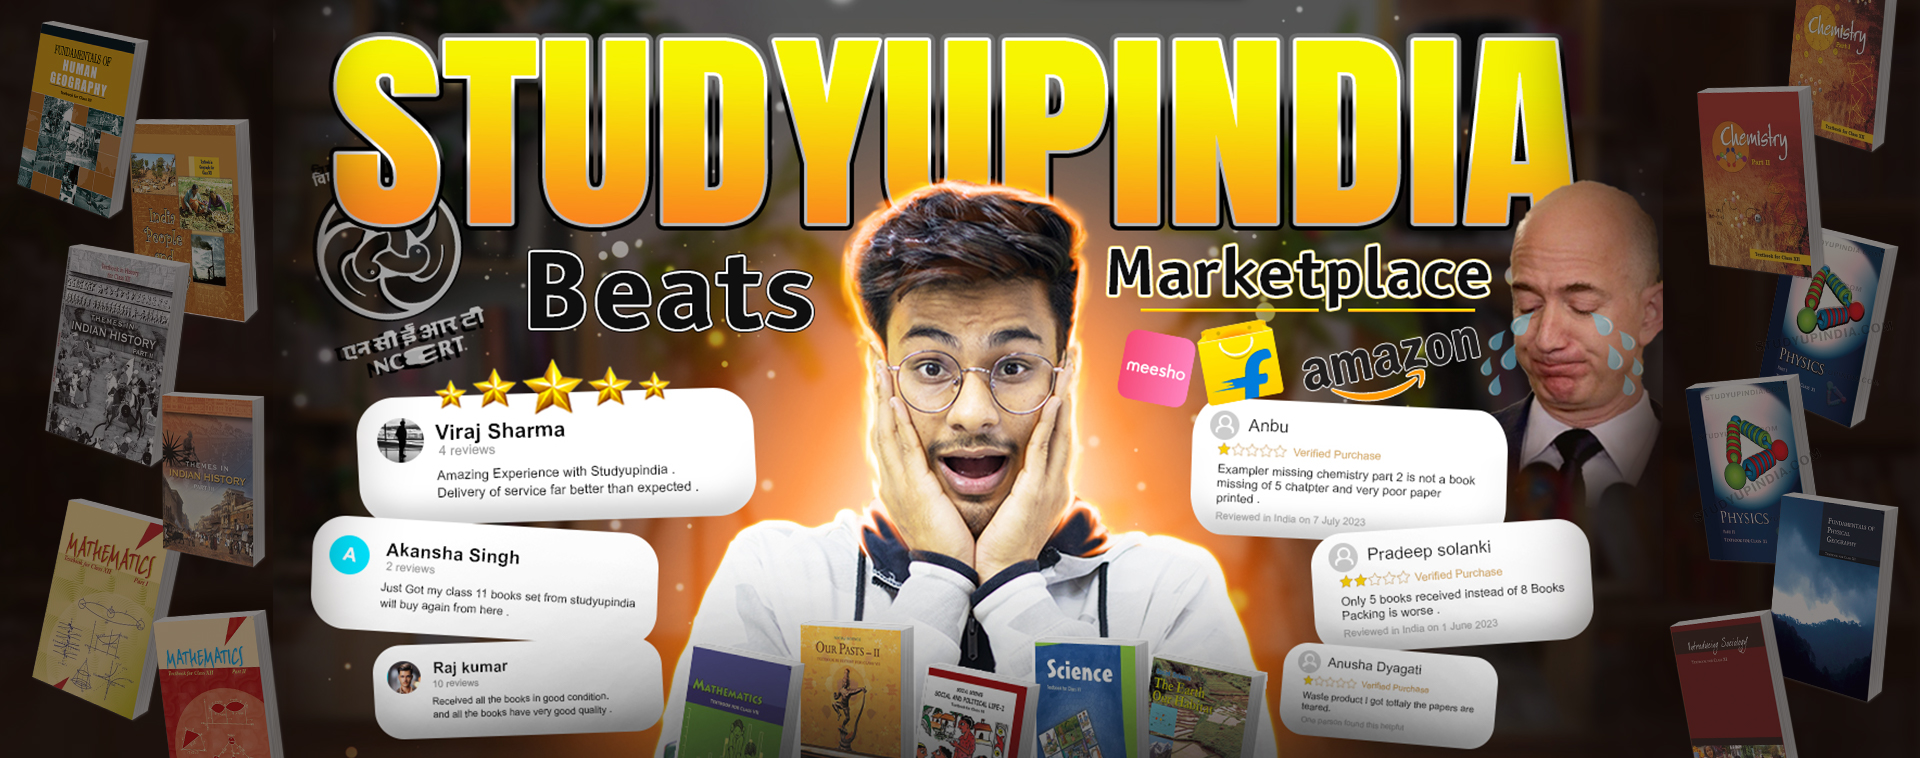 Studyupindia vs marketplace
